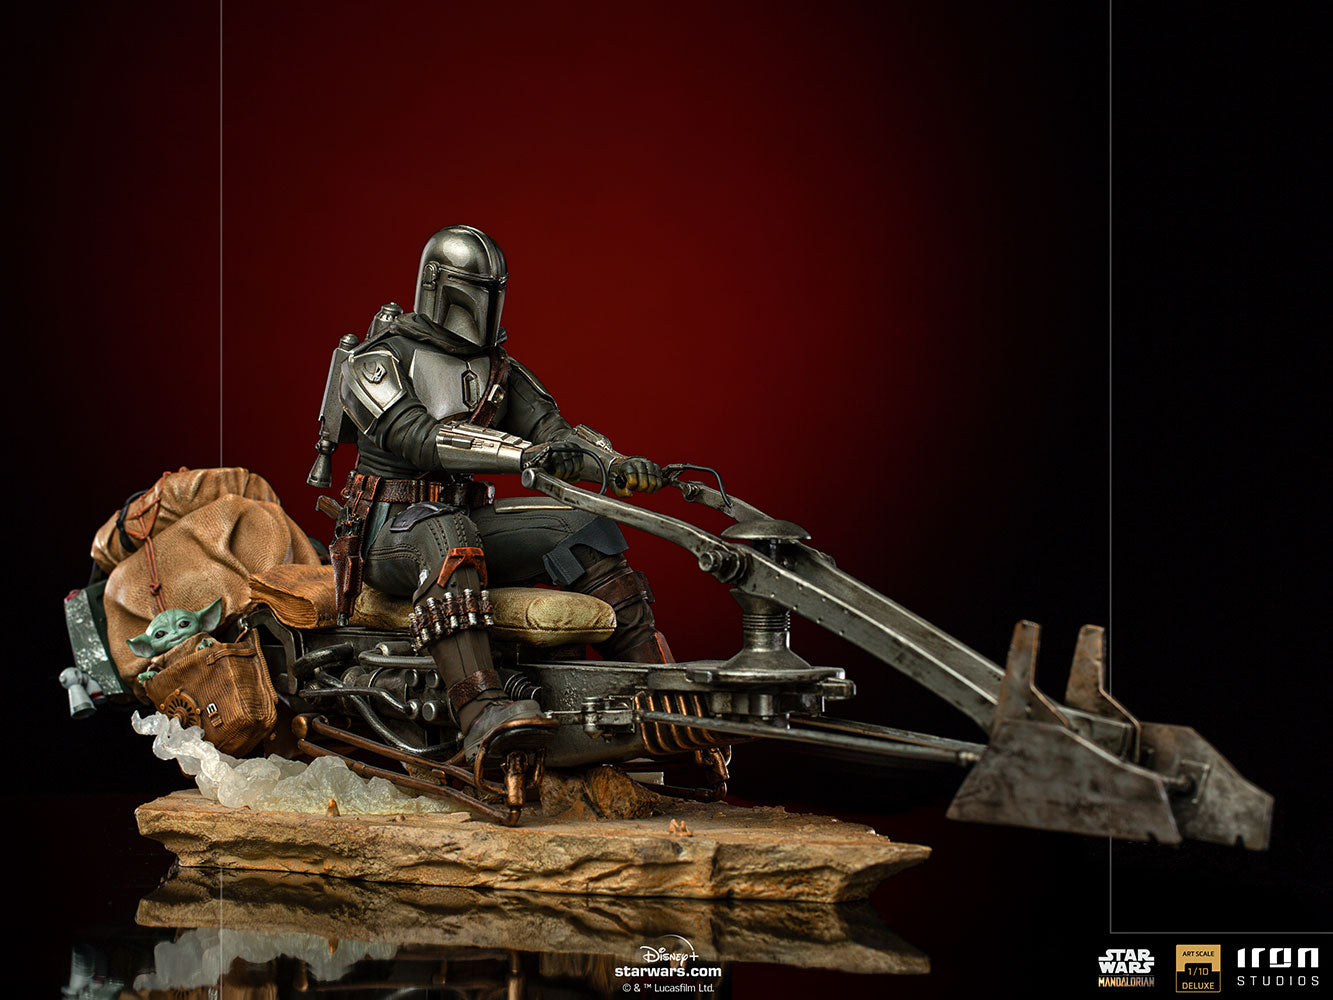 The Mandalorian on Speederbike (Star Wars) Deluxe 1:10 Statue by Iron Studios